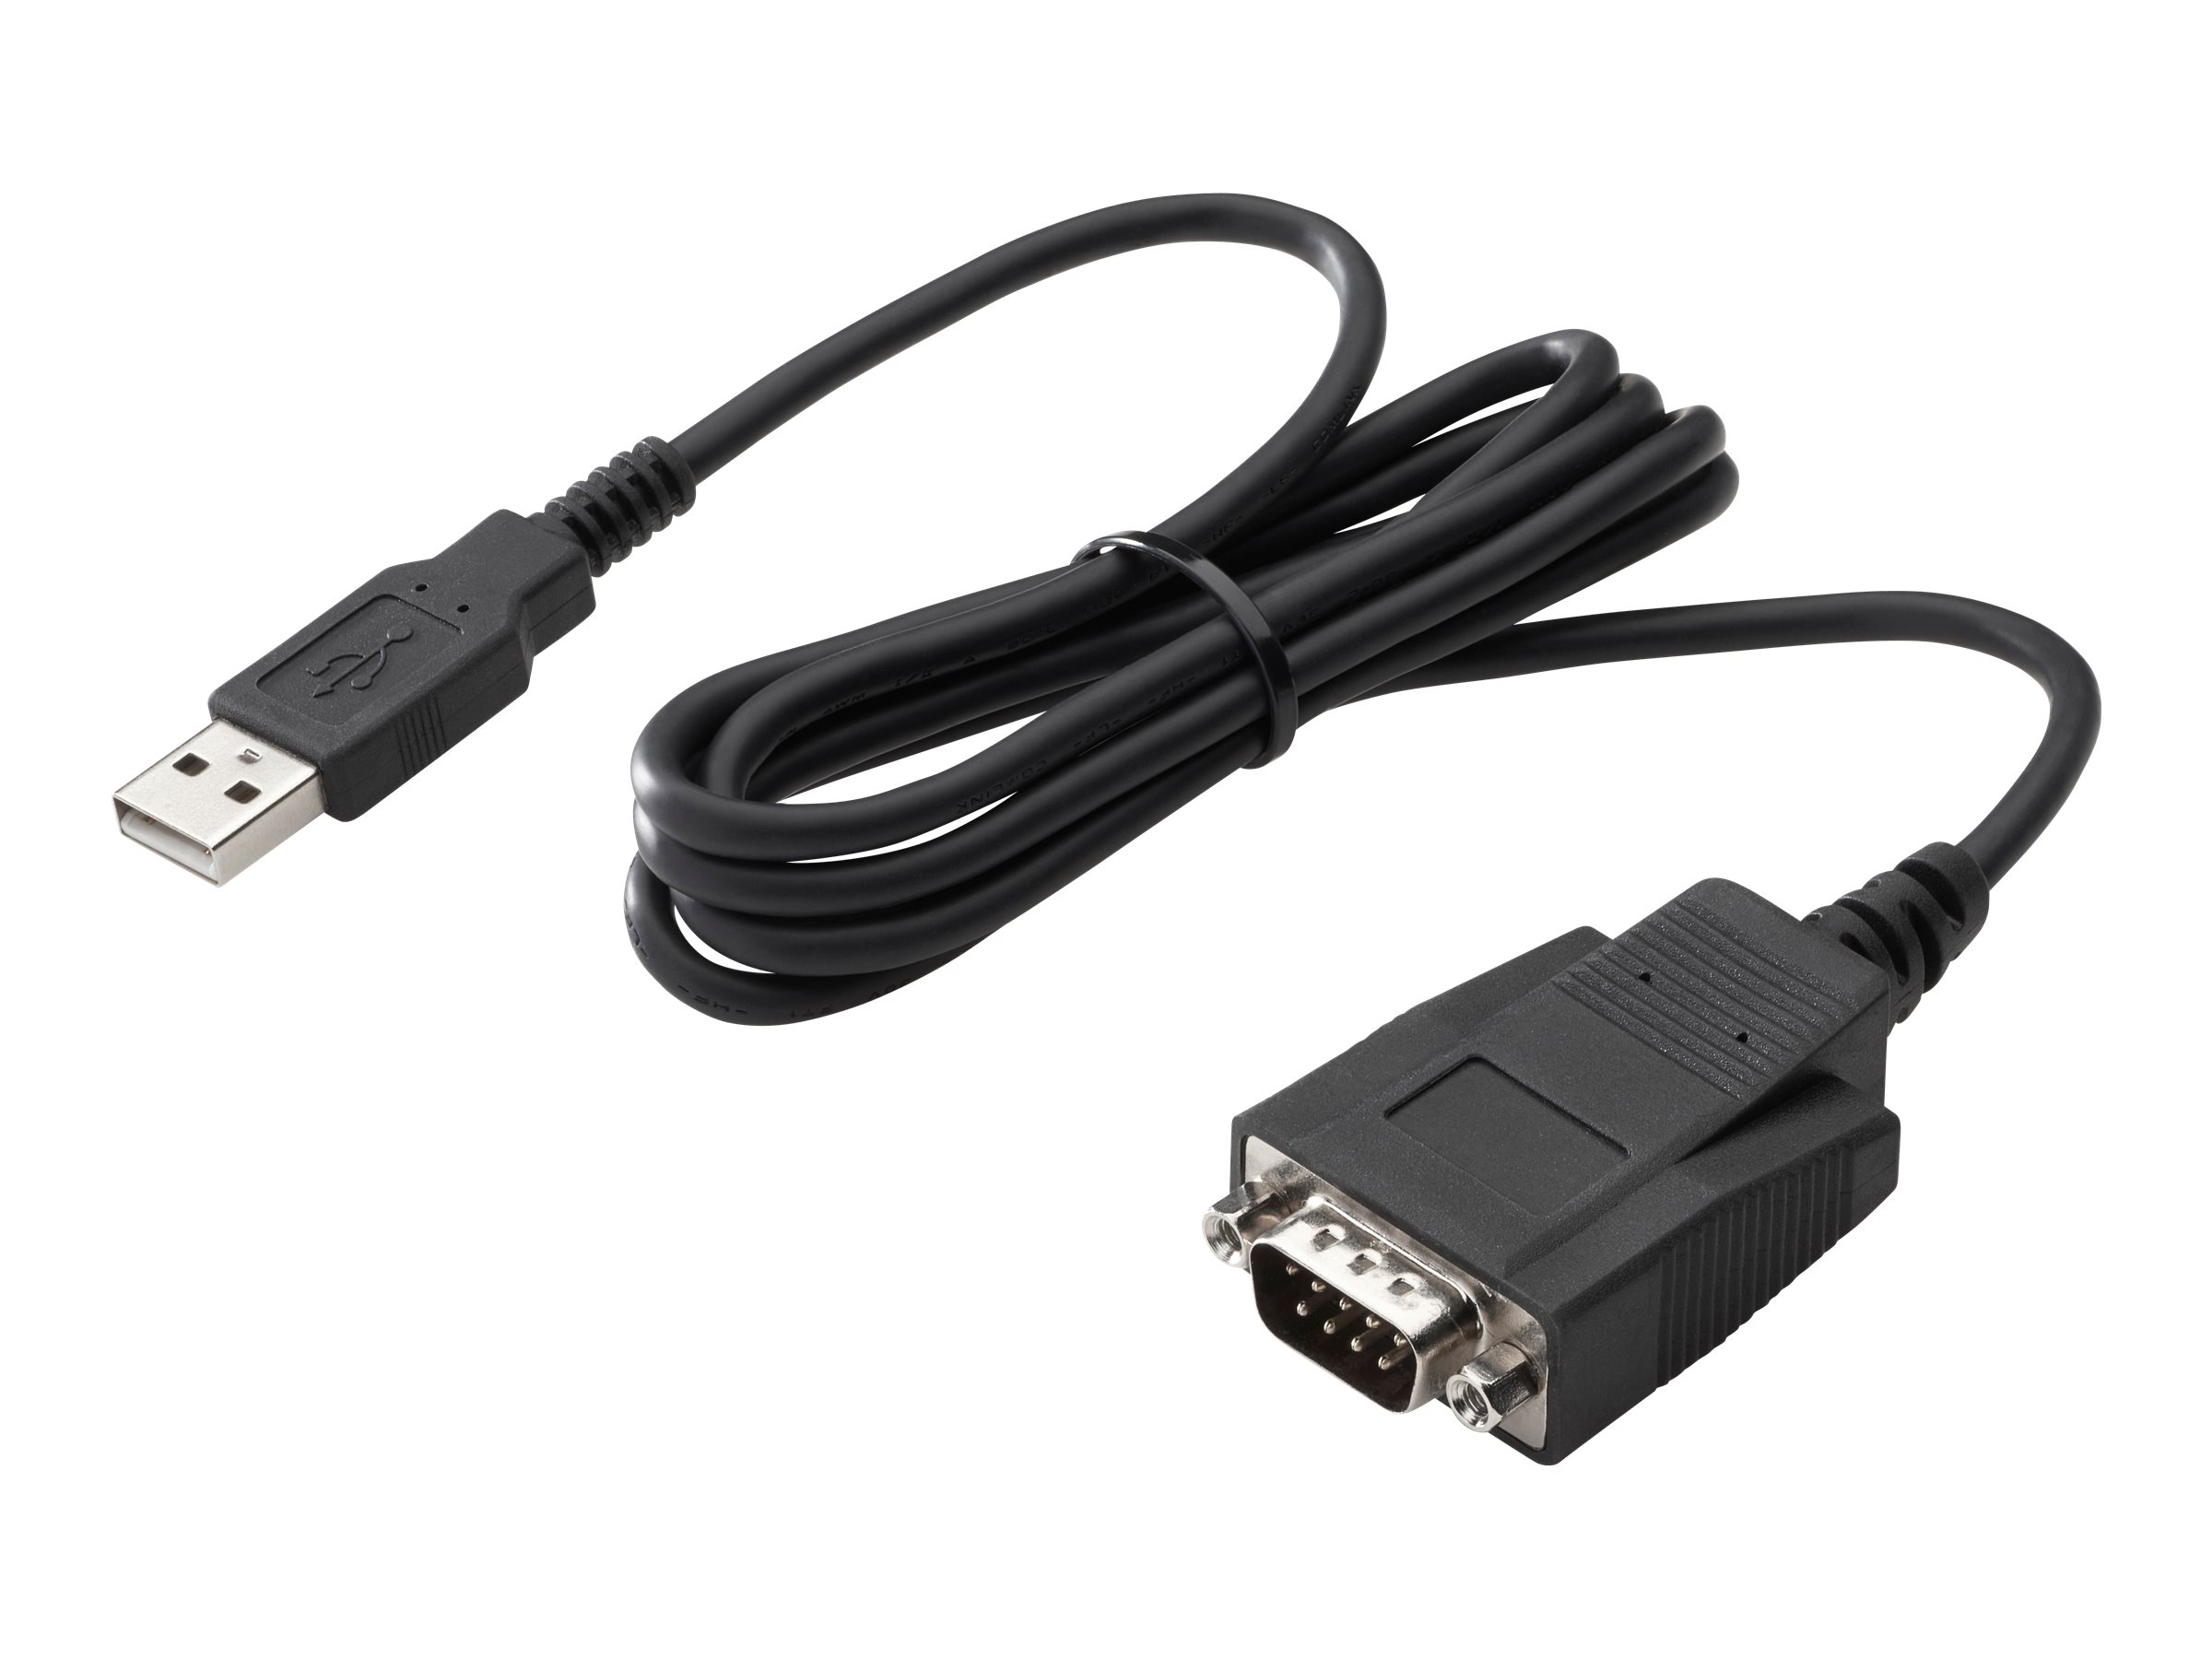 HP USB to Serial Port Adapter (J7B60AA)